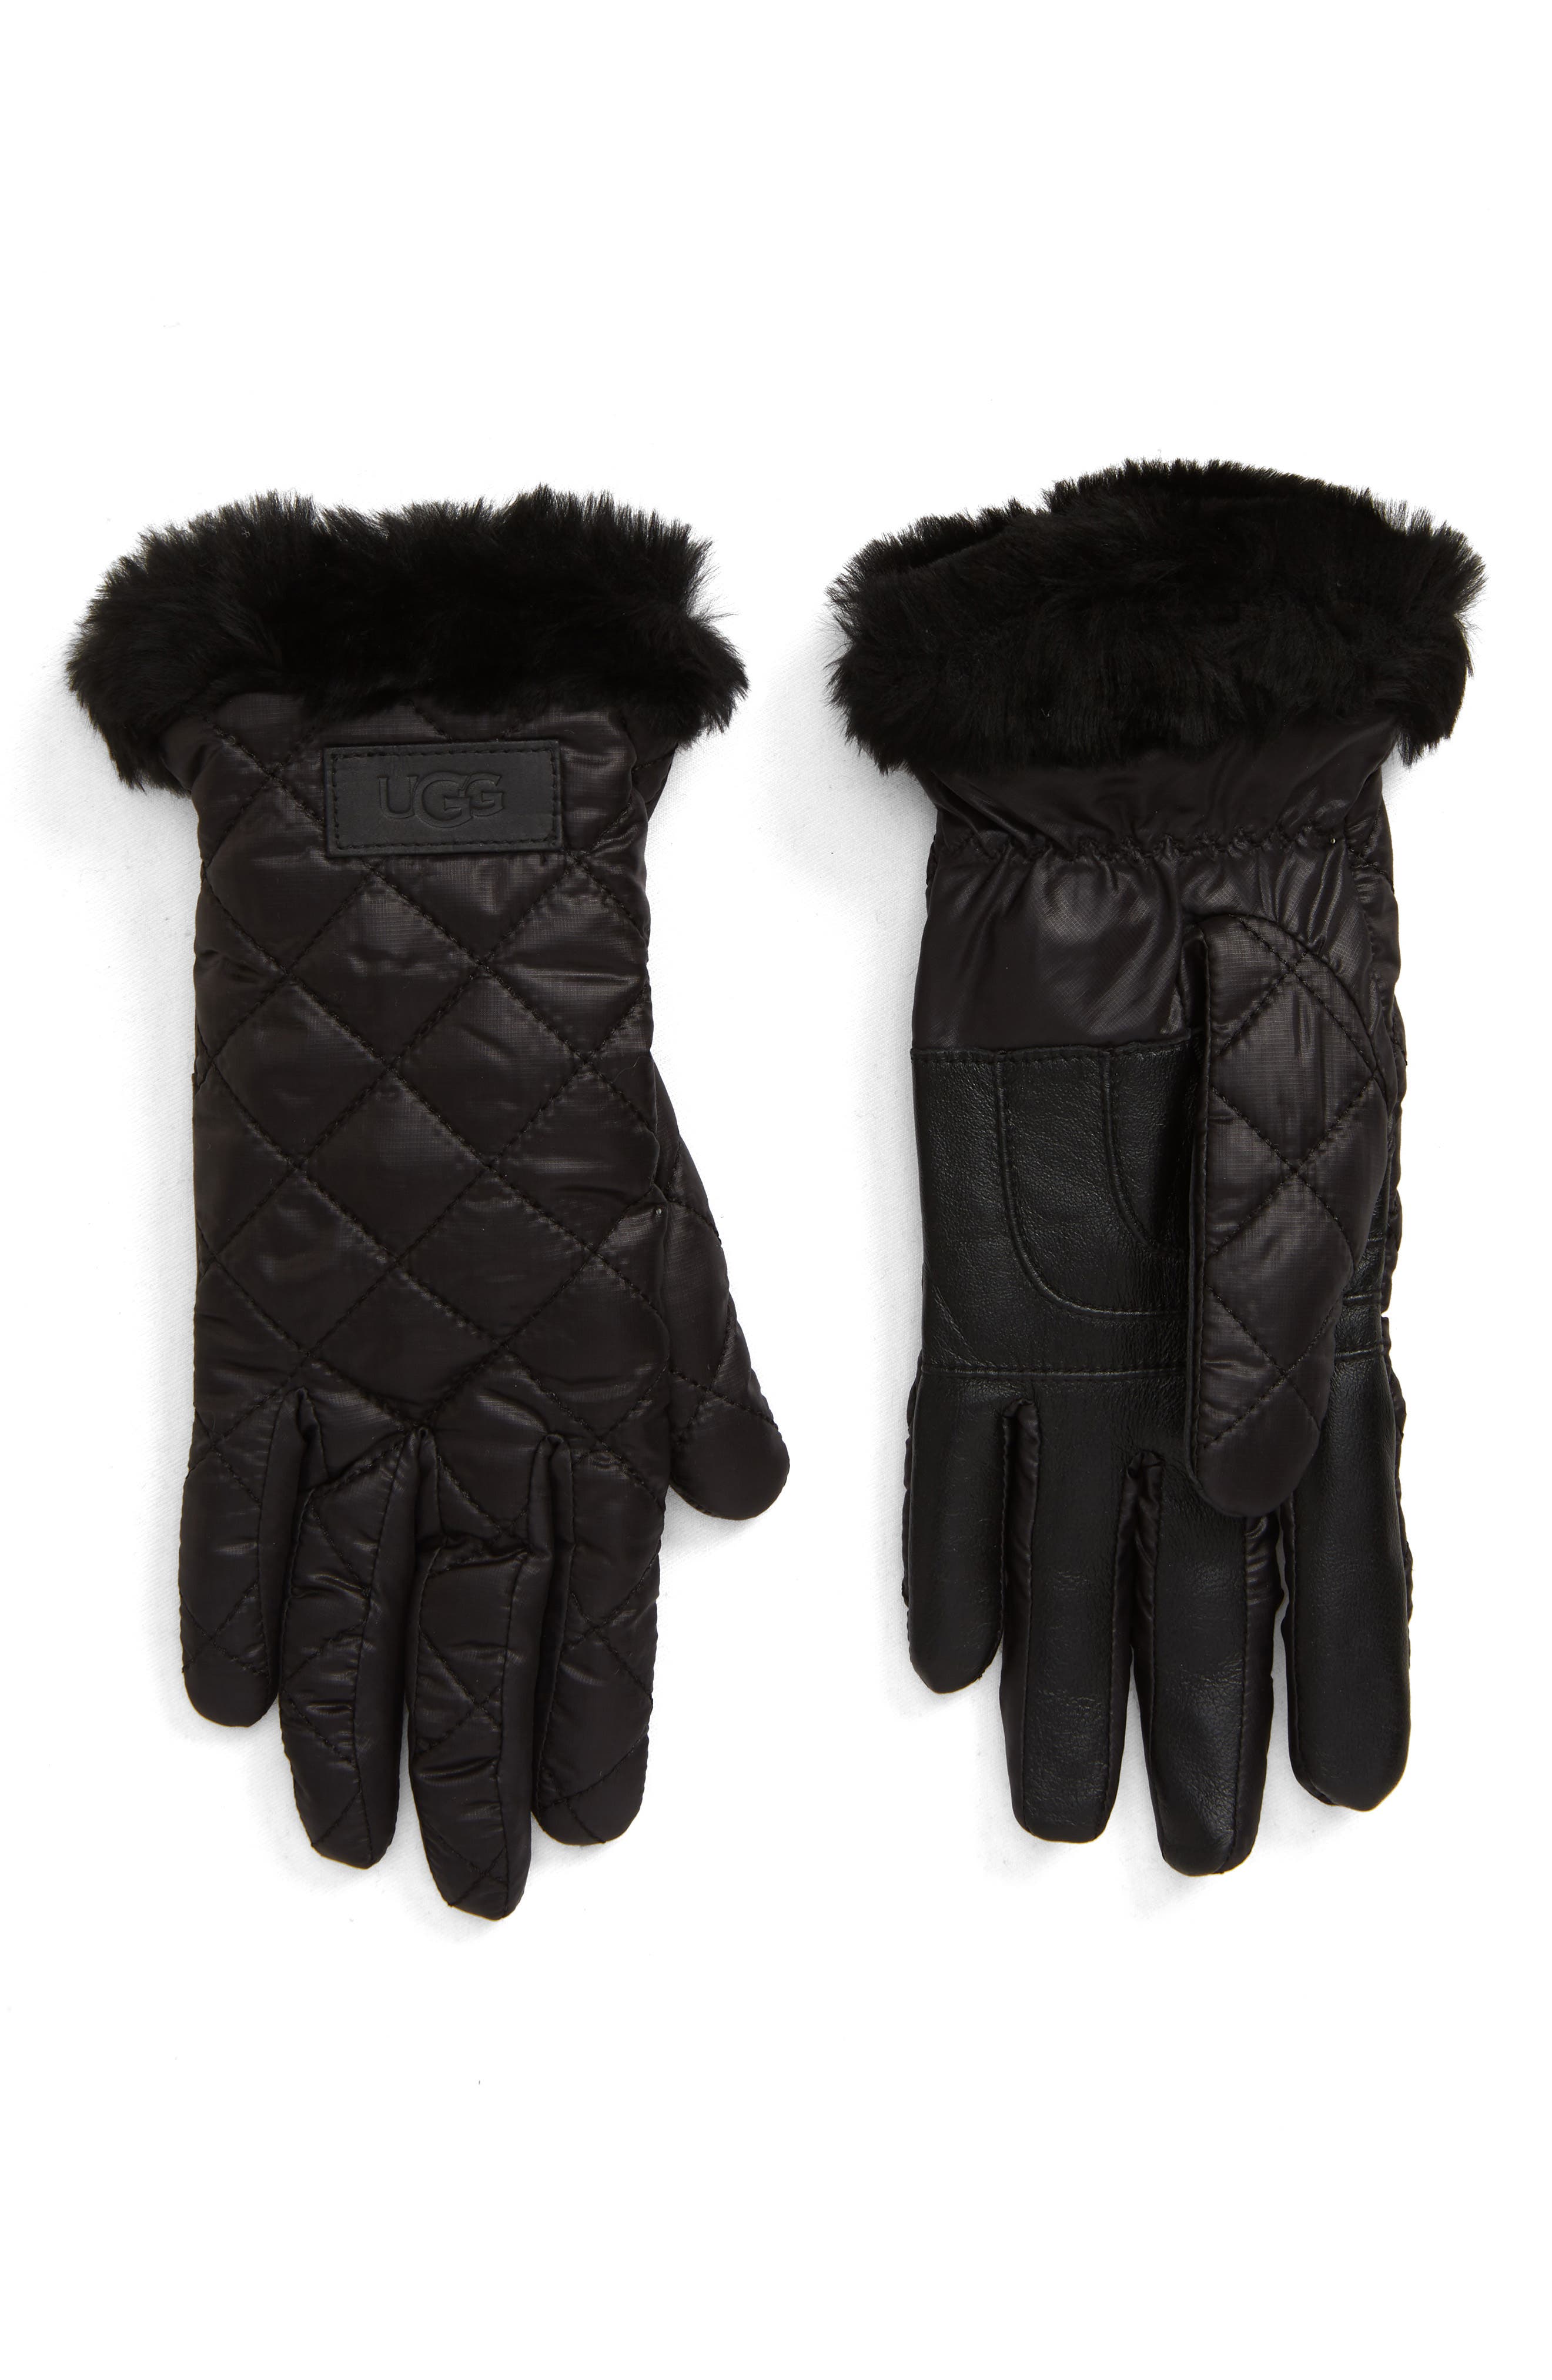 Black/Pink Single discount 67% Asics gloves WOMEN FASHION Accessories Gloves 